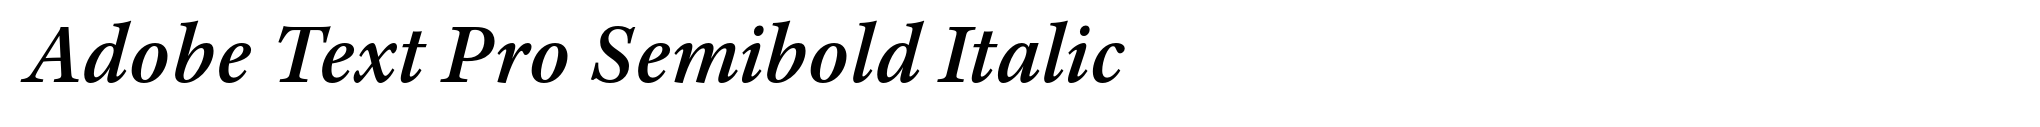 Adobe Text Pro Semibold Italic image